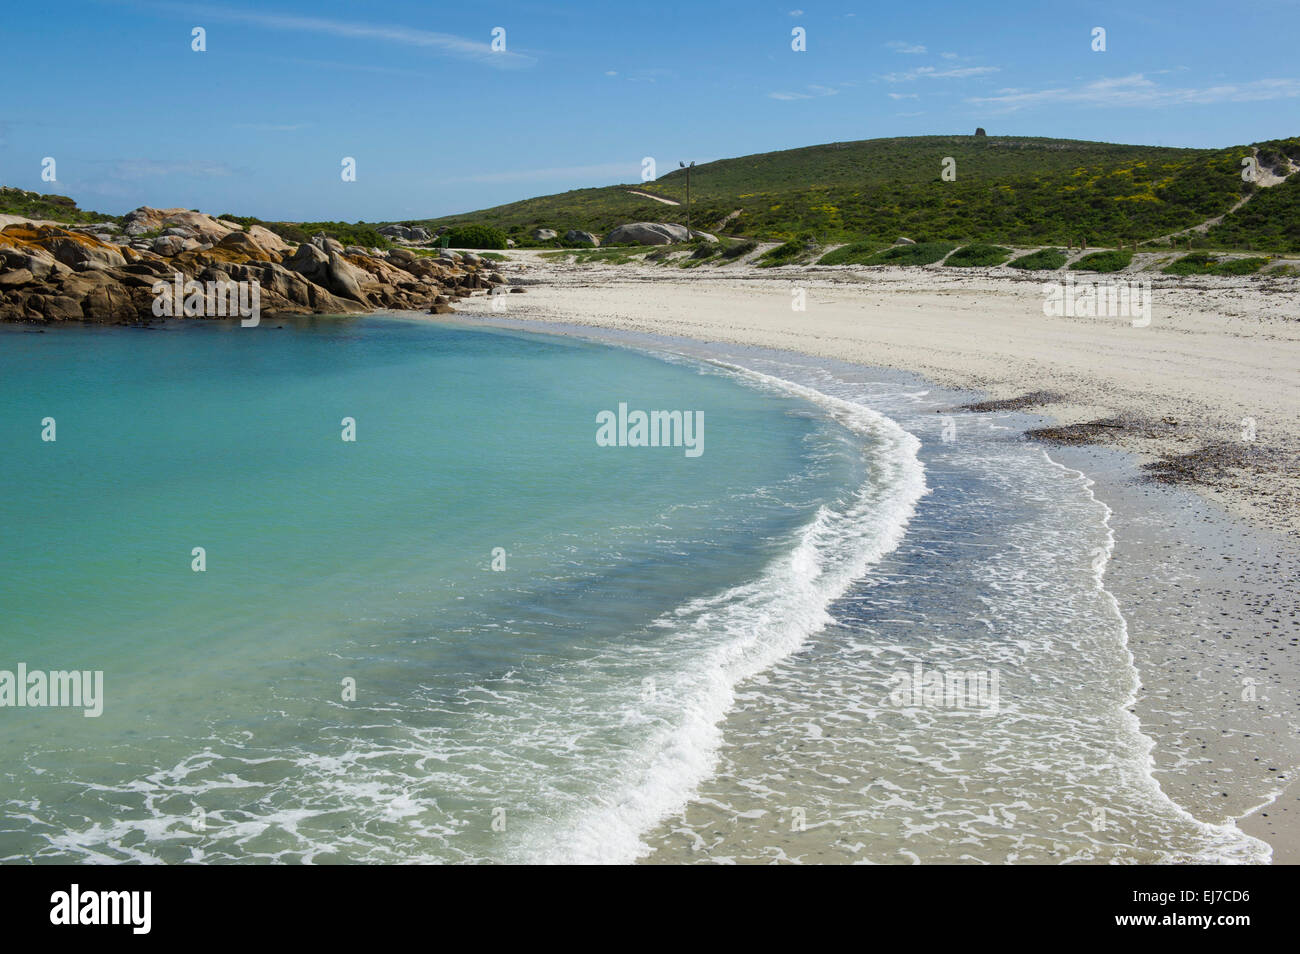 Sandy beach, Cape Columbine Nature Reserve, Paternoster, South Africa Stock Photo